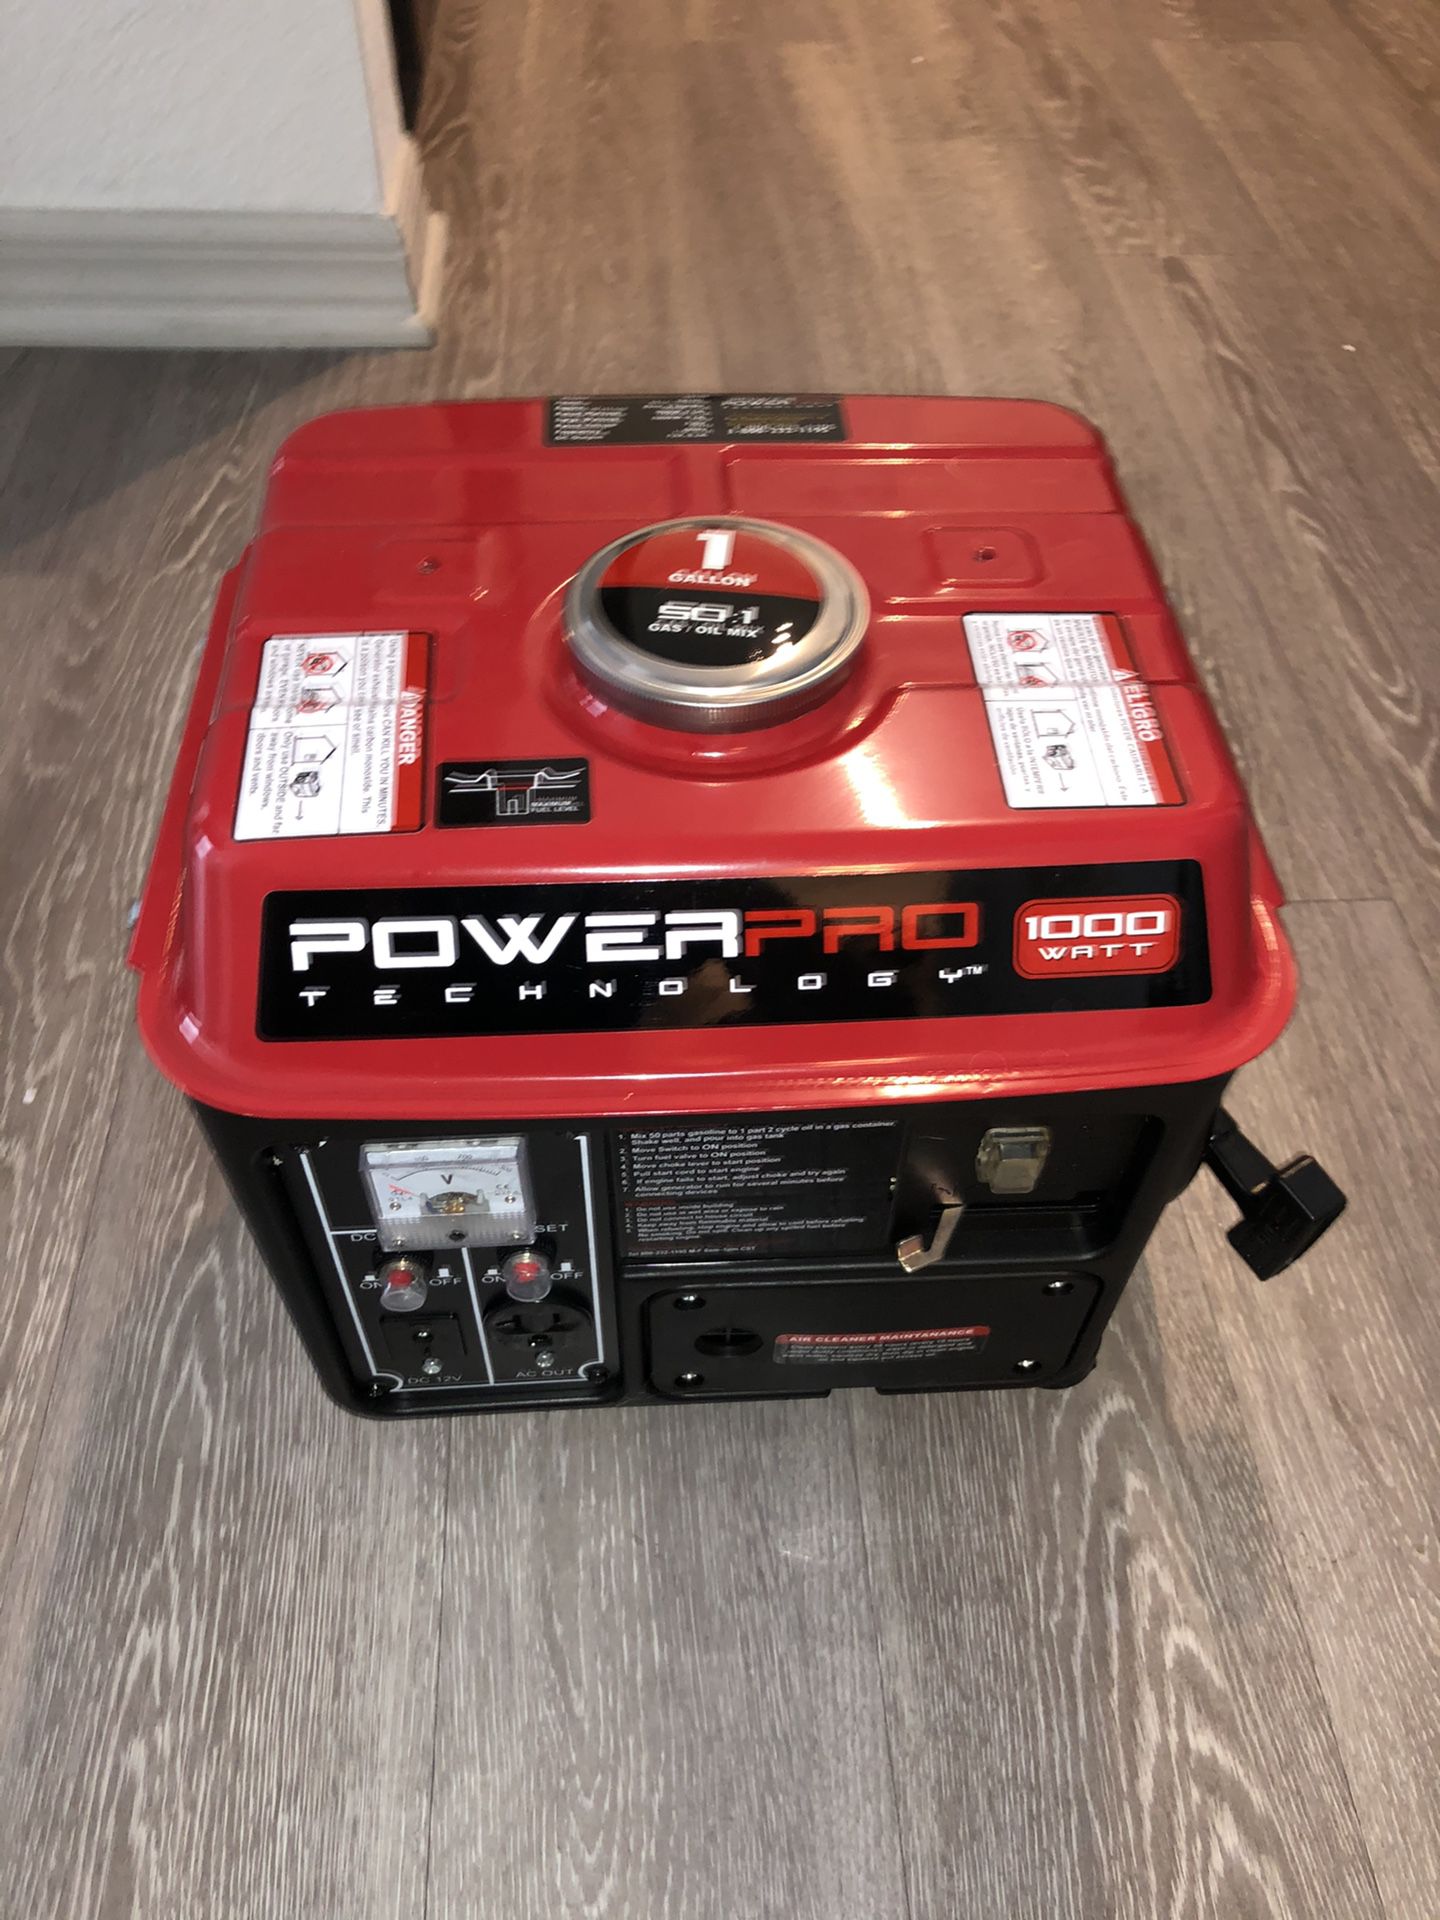 Power Pro 1000w Generator